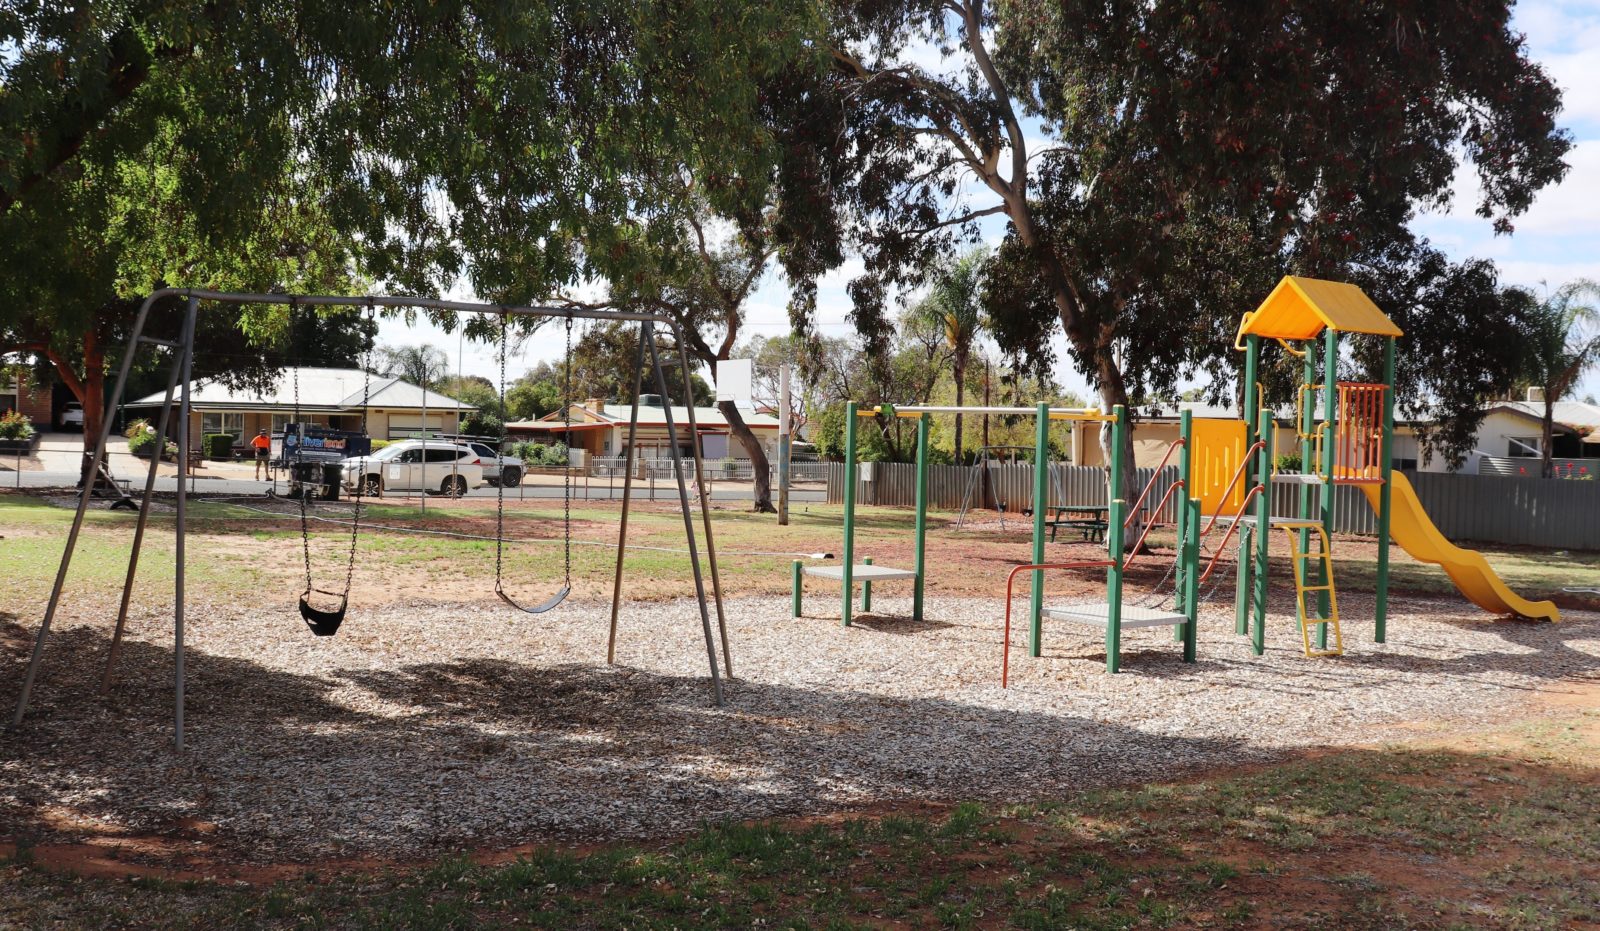 The playground has plenty of shade.